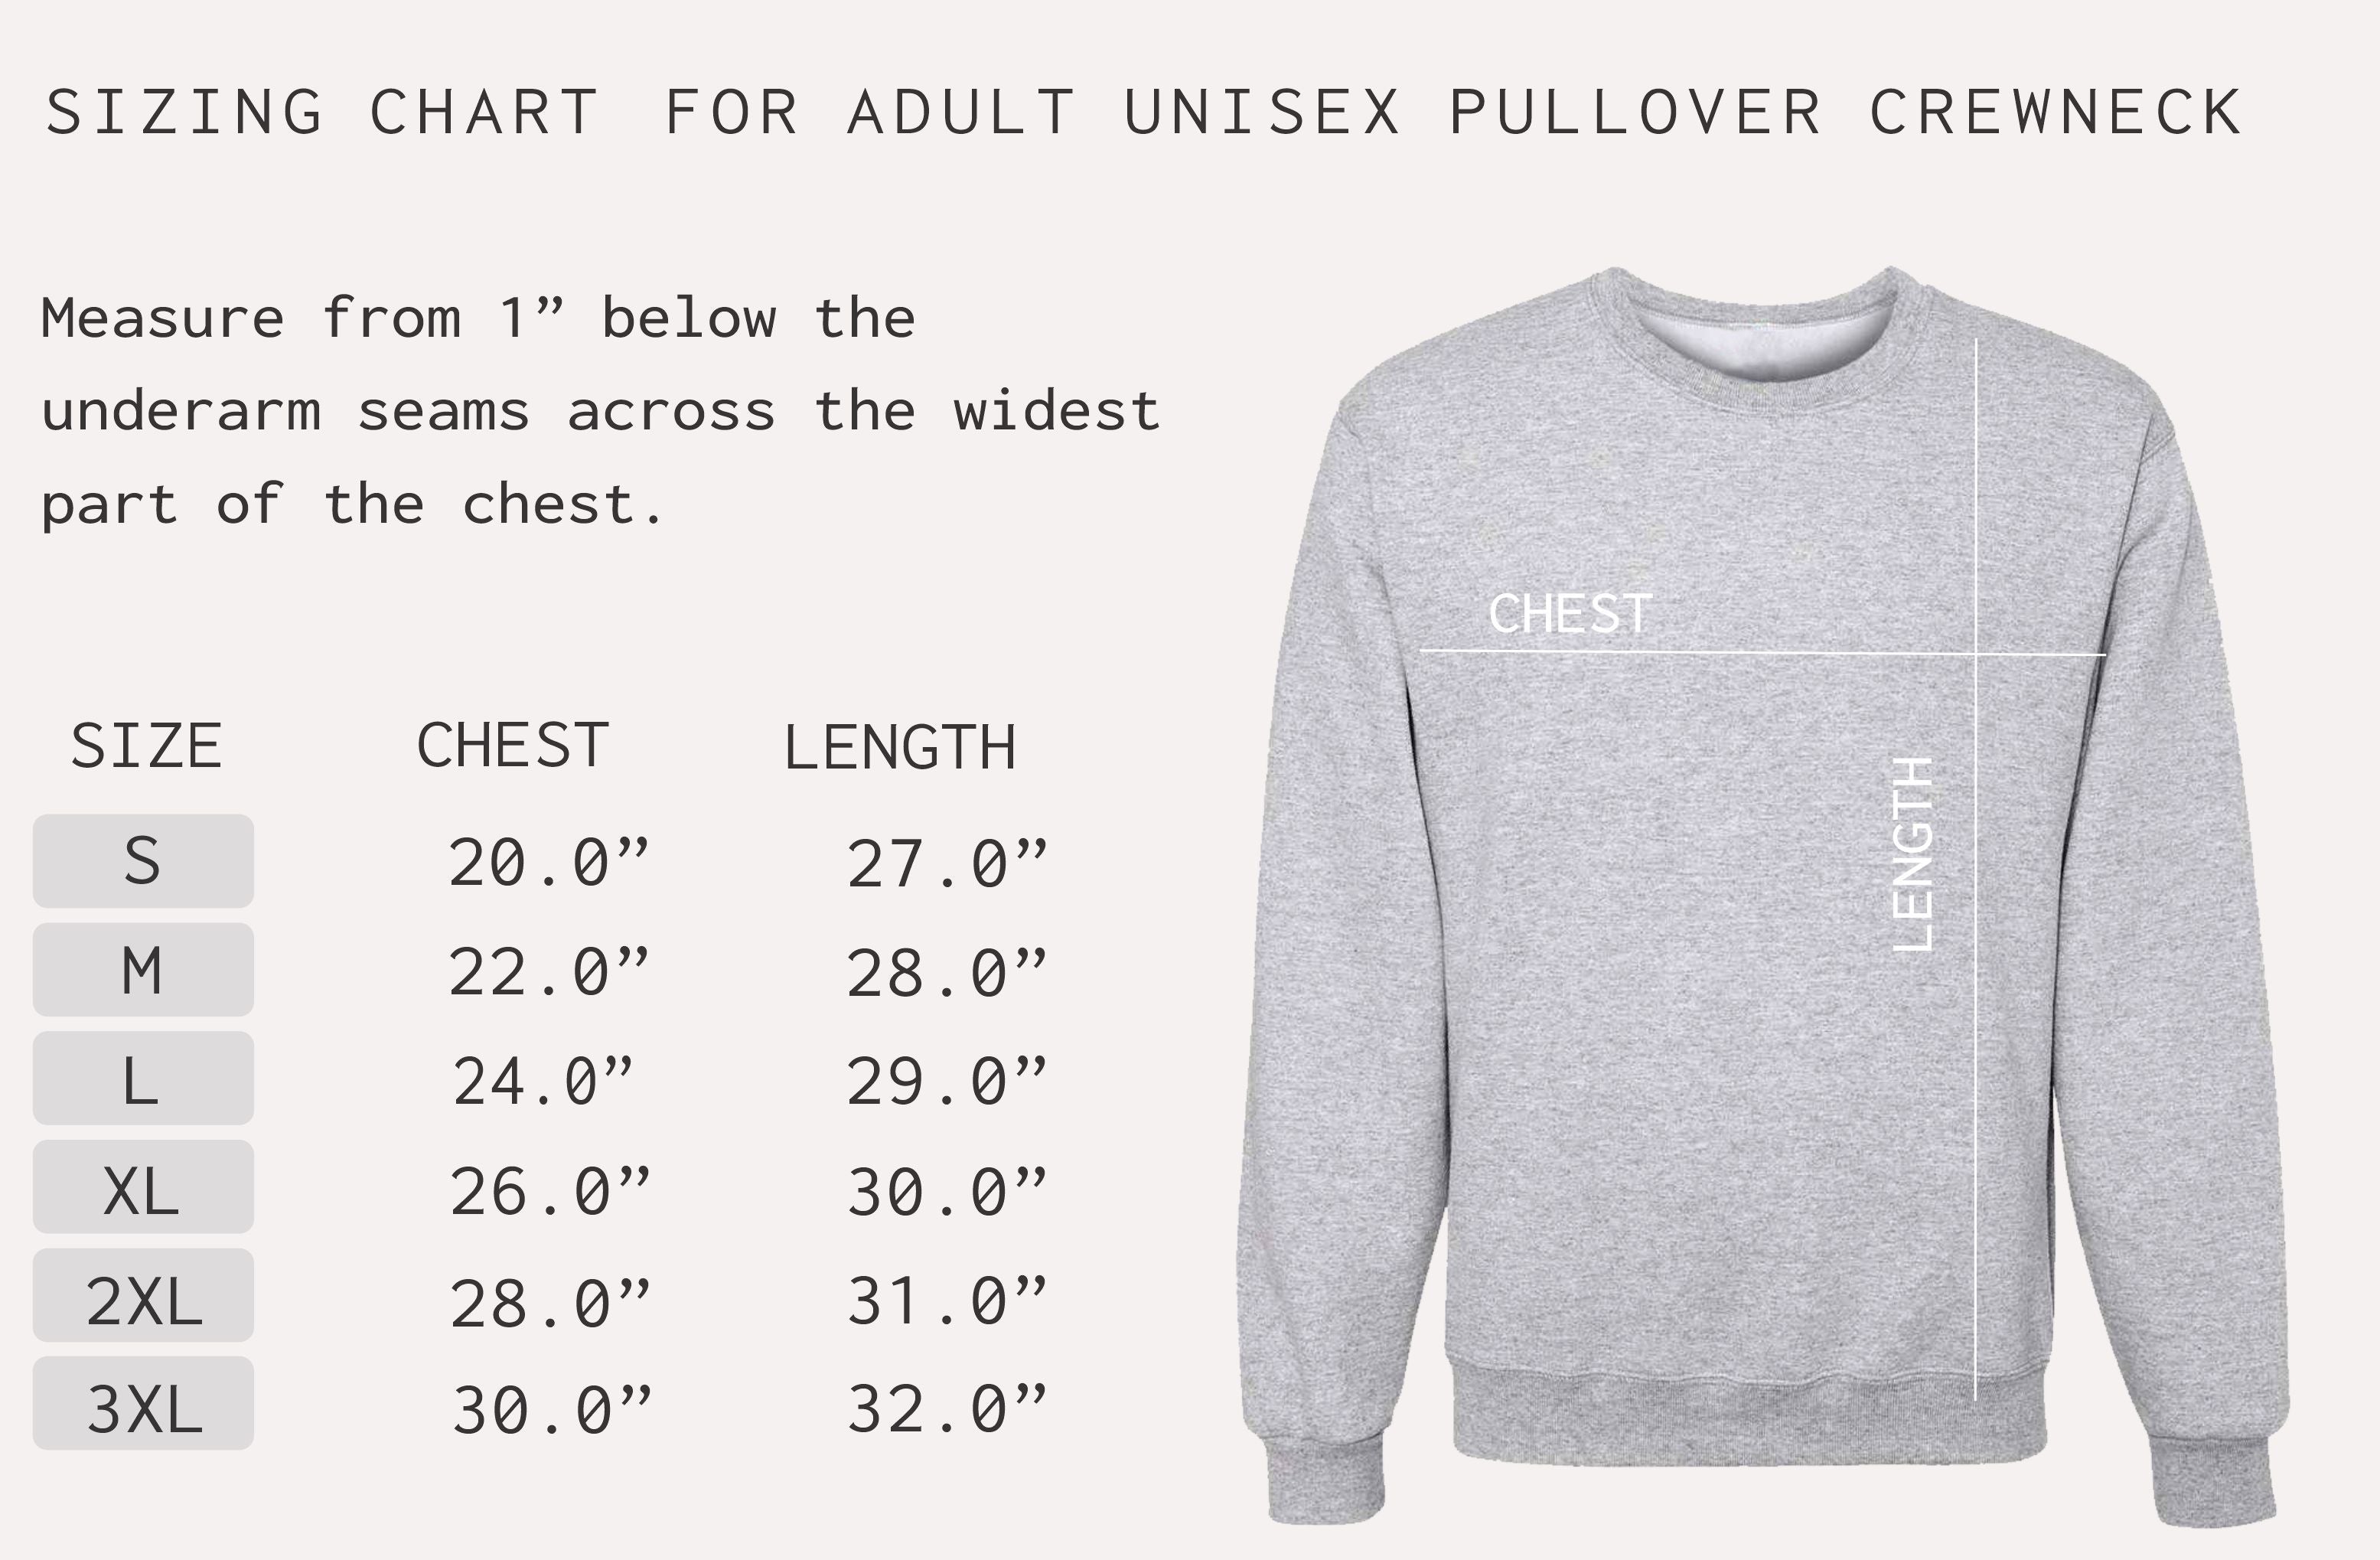 Adult Unisex Cawfee! crewneck sweater